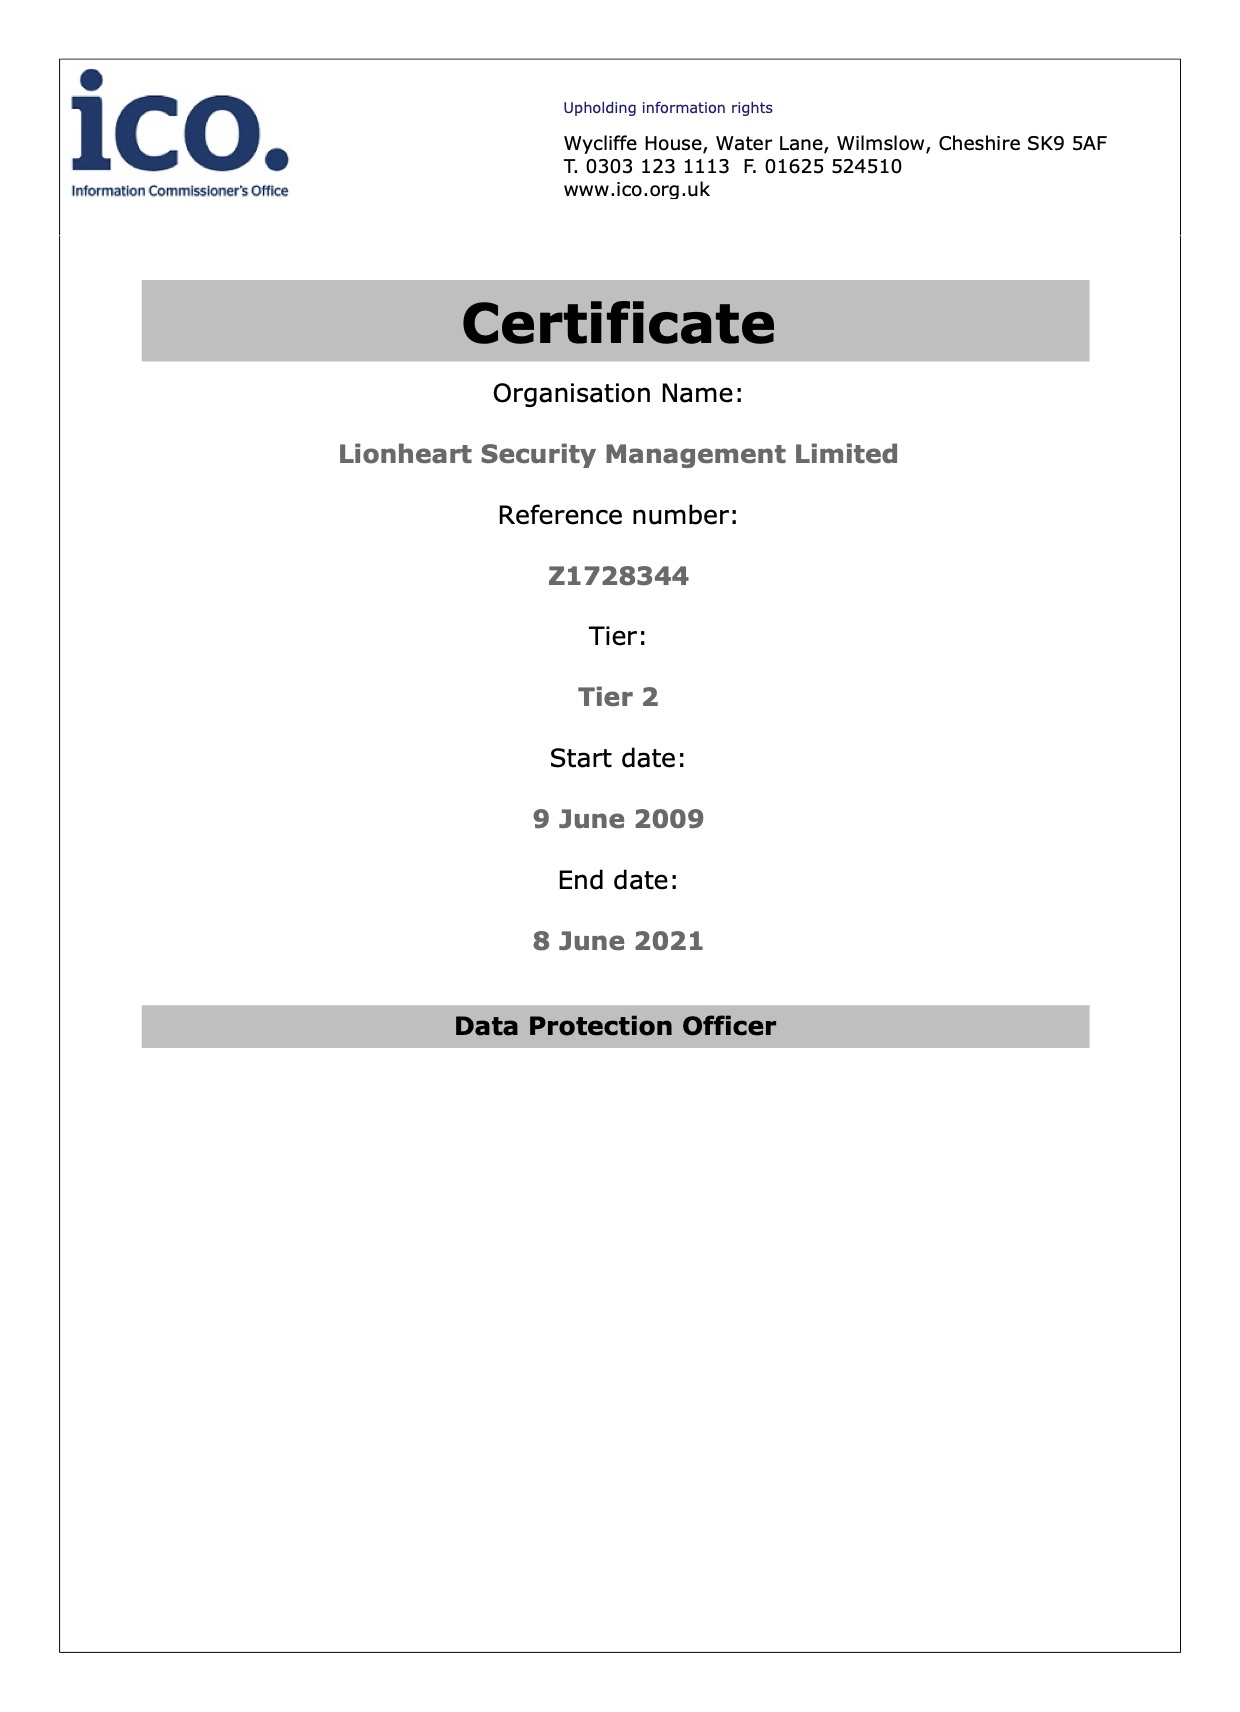 ICO Certificate